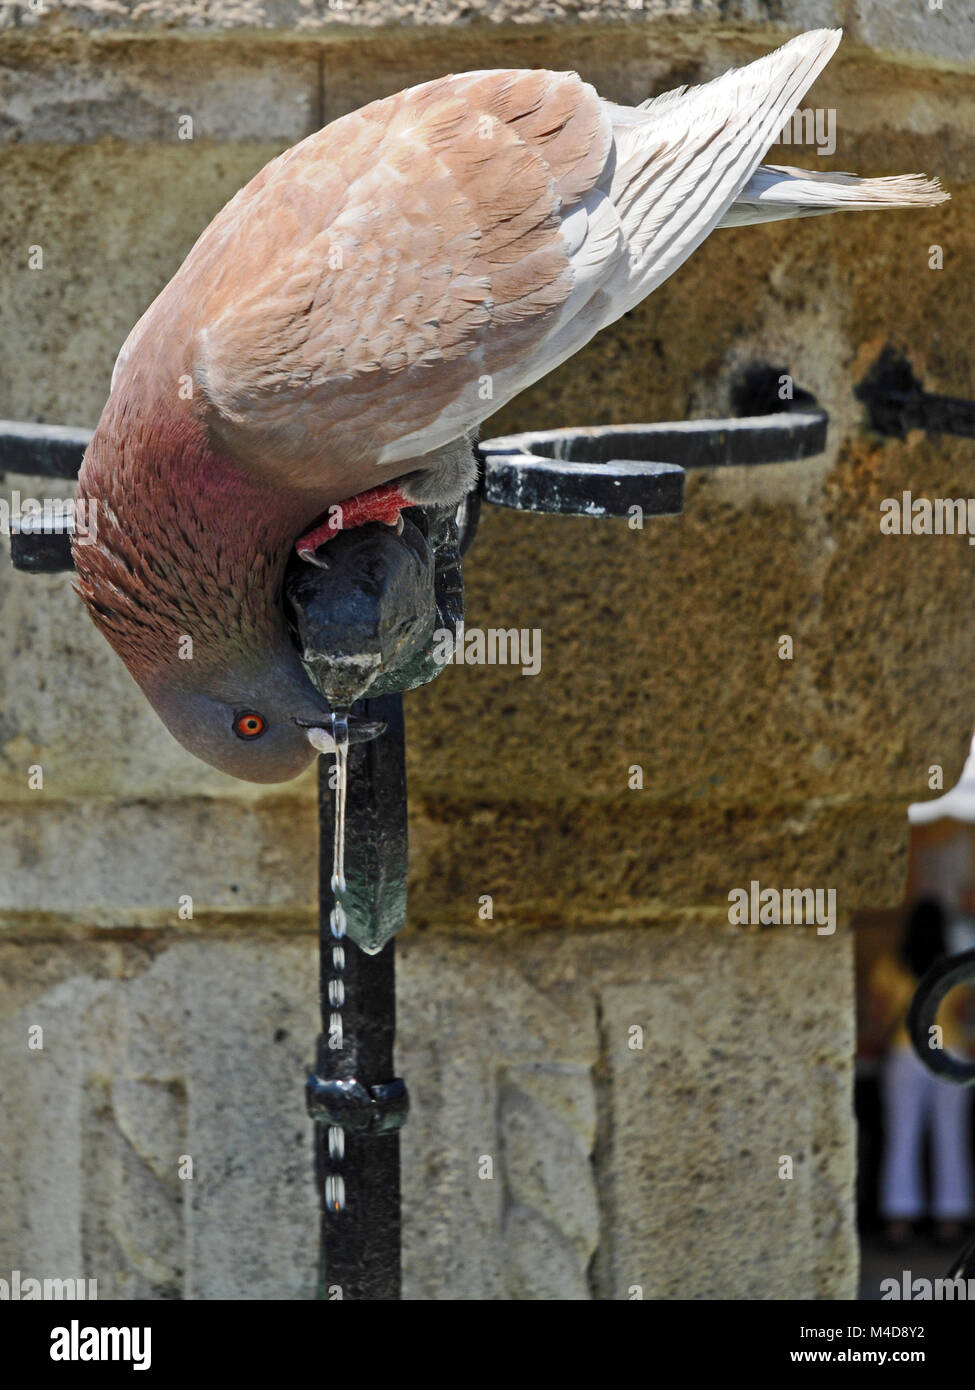 Thirsty pigeon Stock Photo